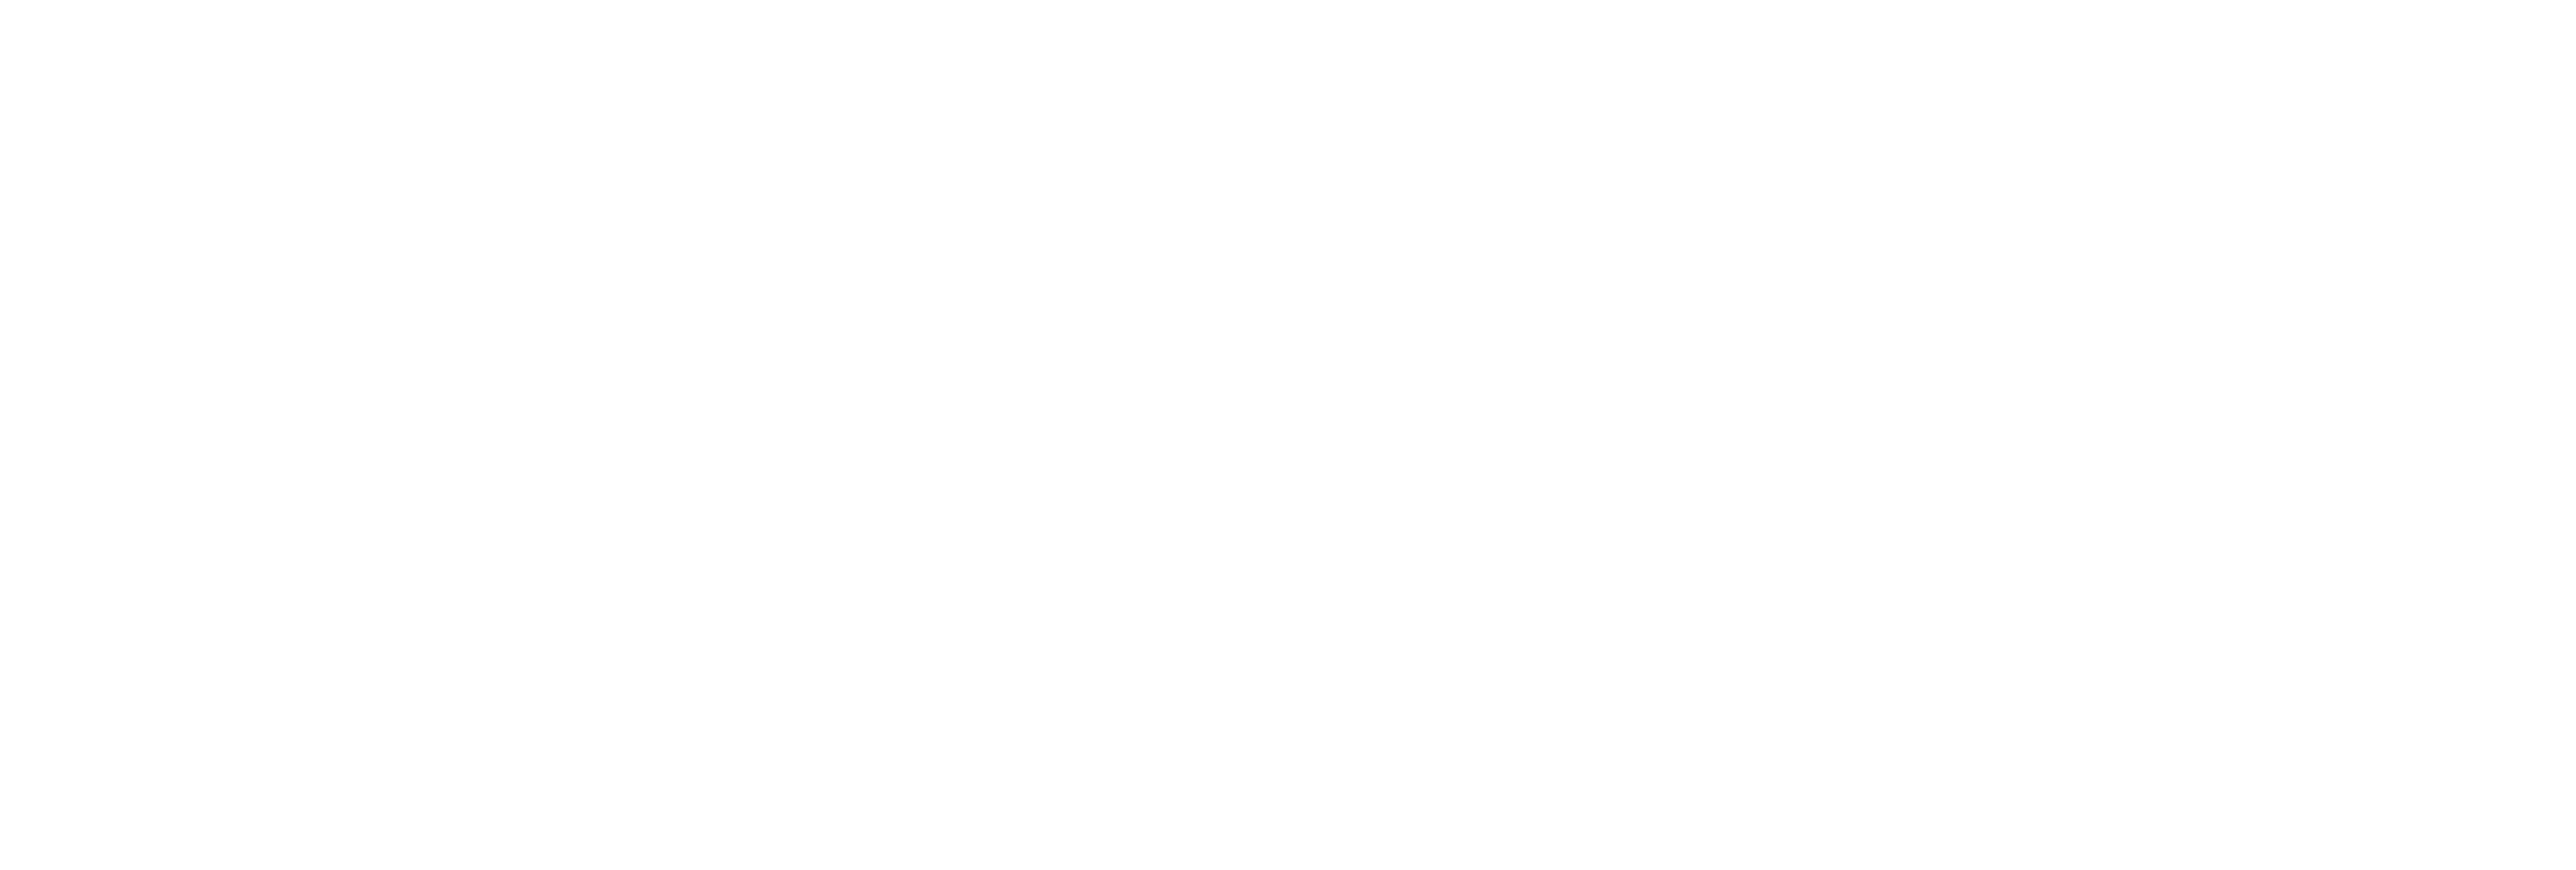 AniCura Cruz Verde Centro Veterinario logo